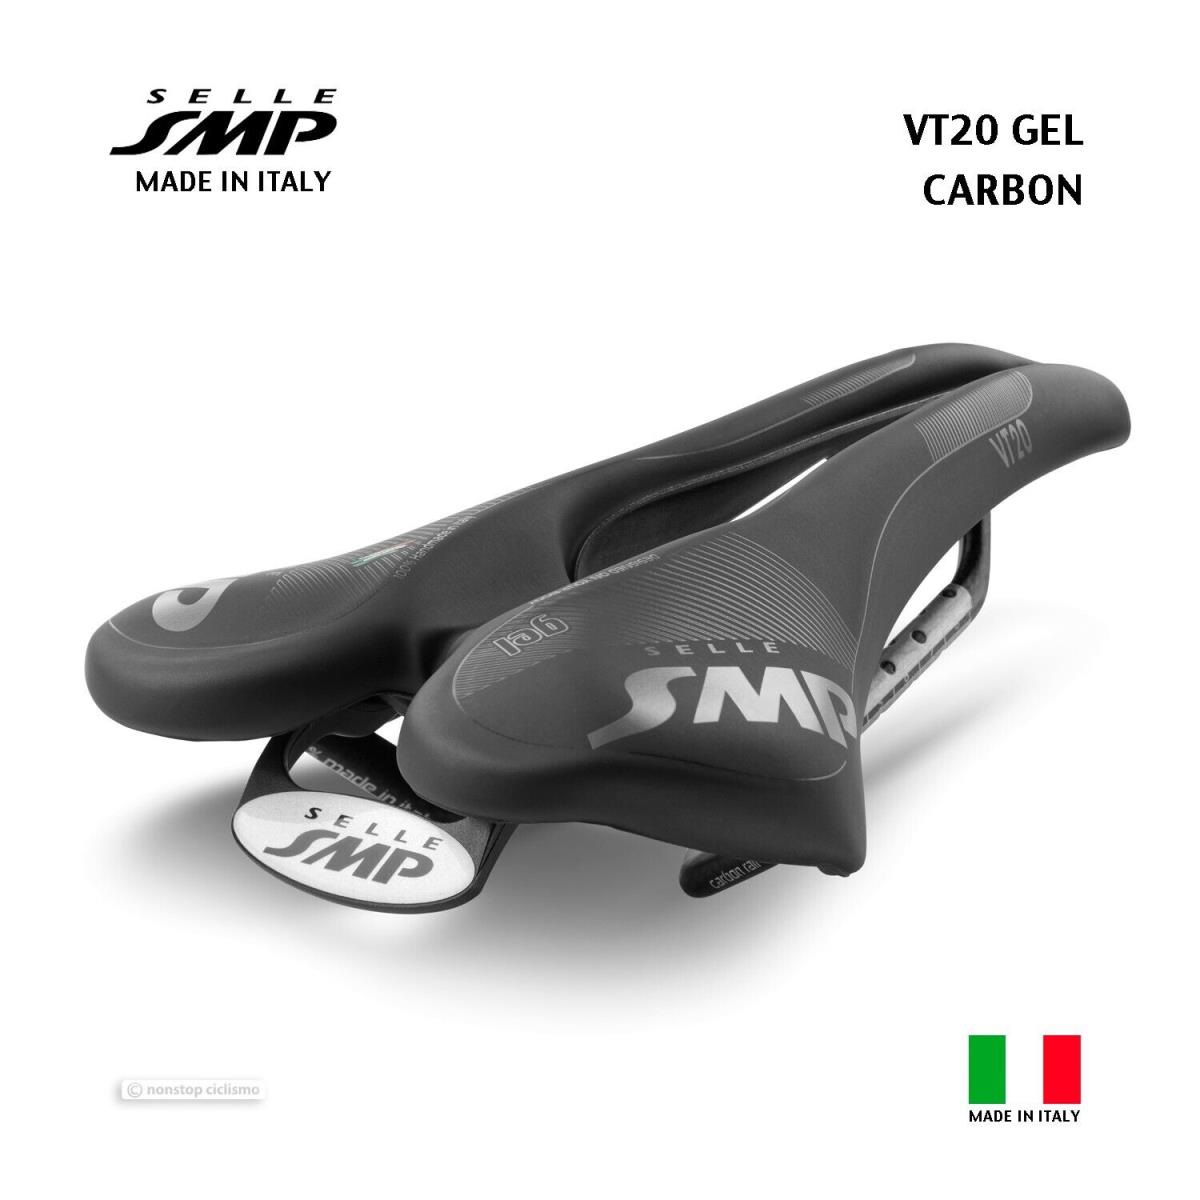 Selle Smp VT20 Gel Carbon Saddle : Velvet Touch Black - Made IN Italy